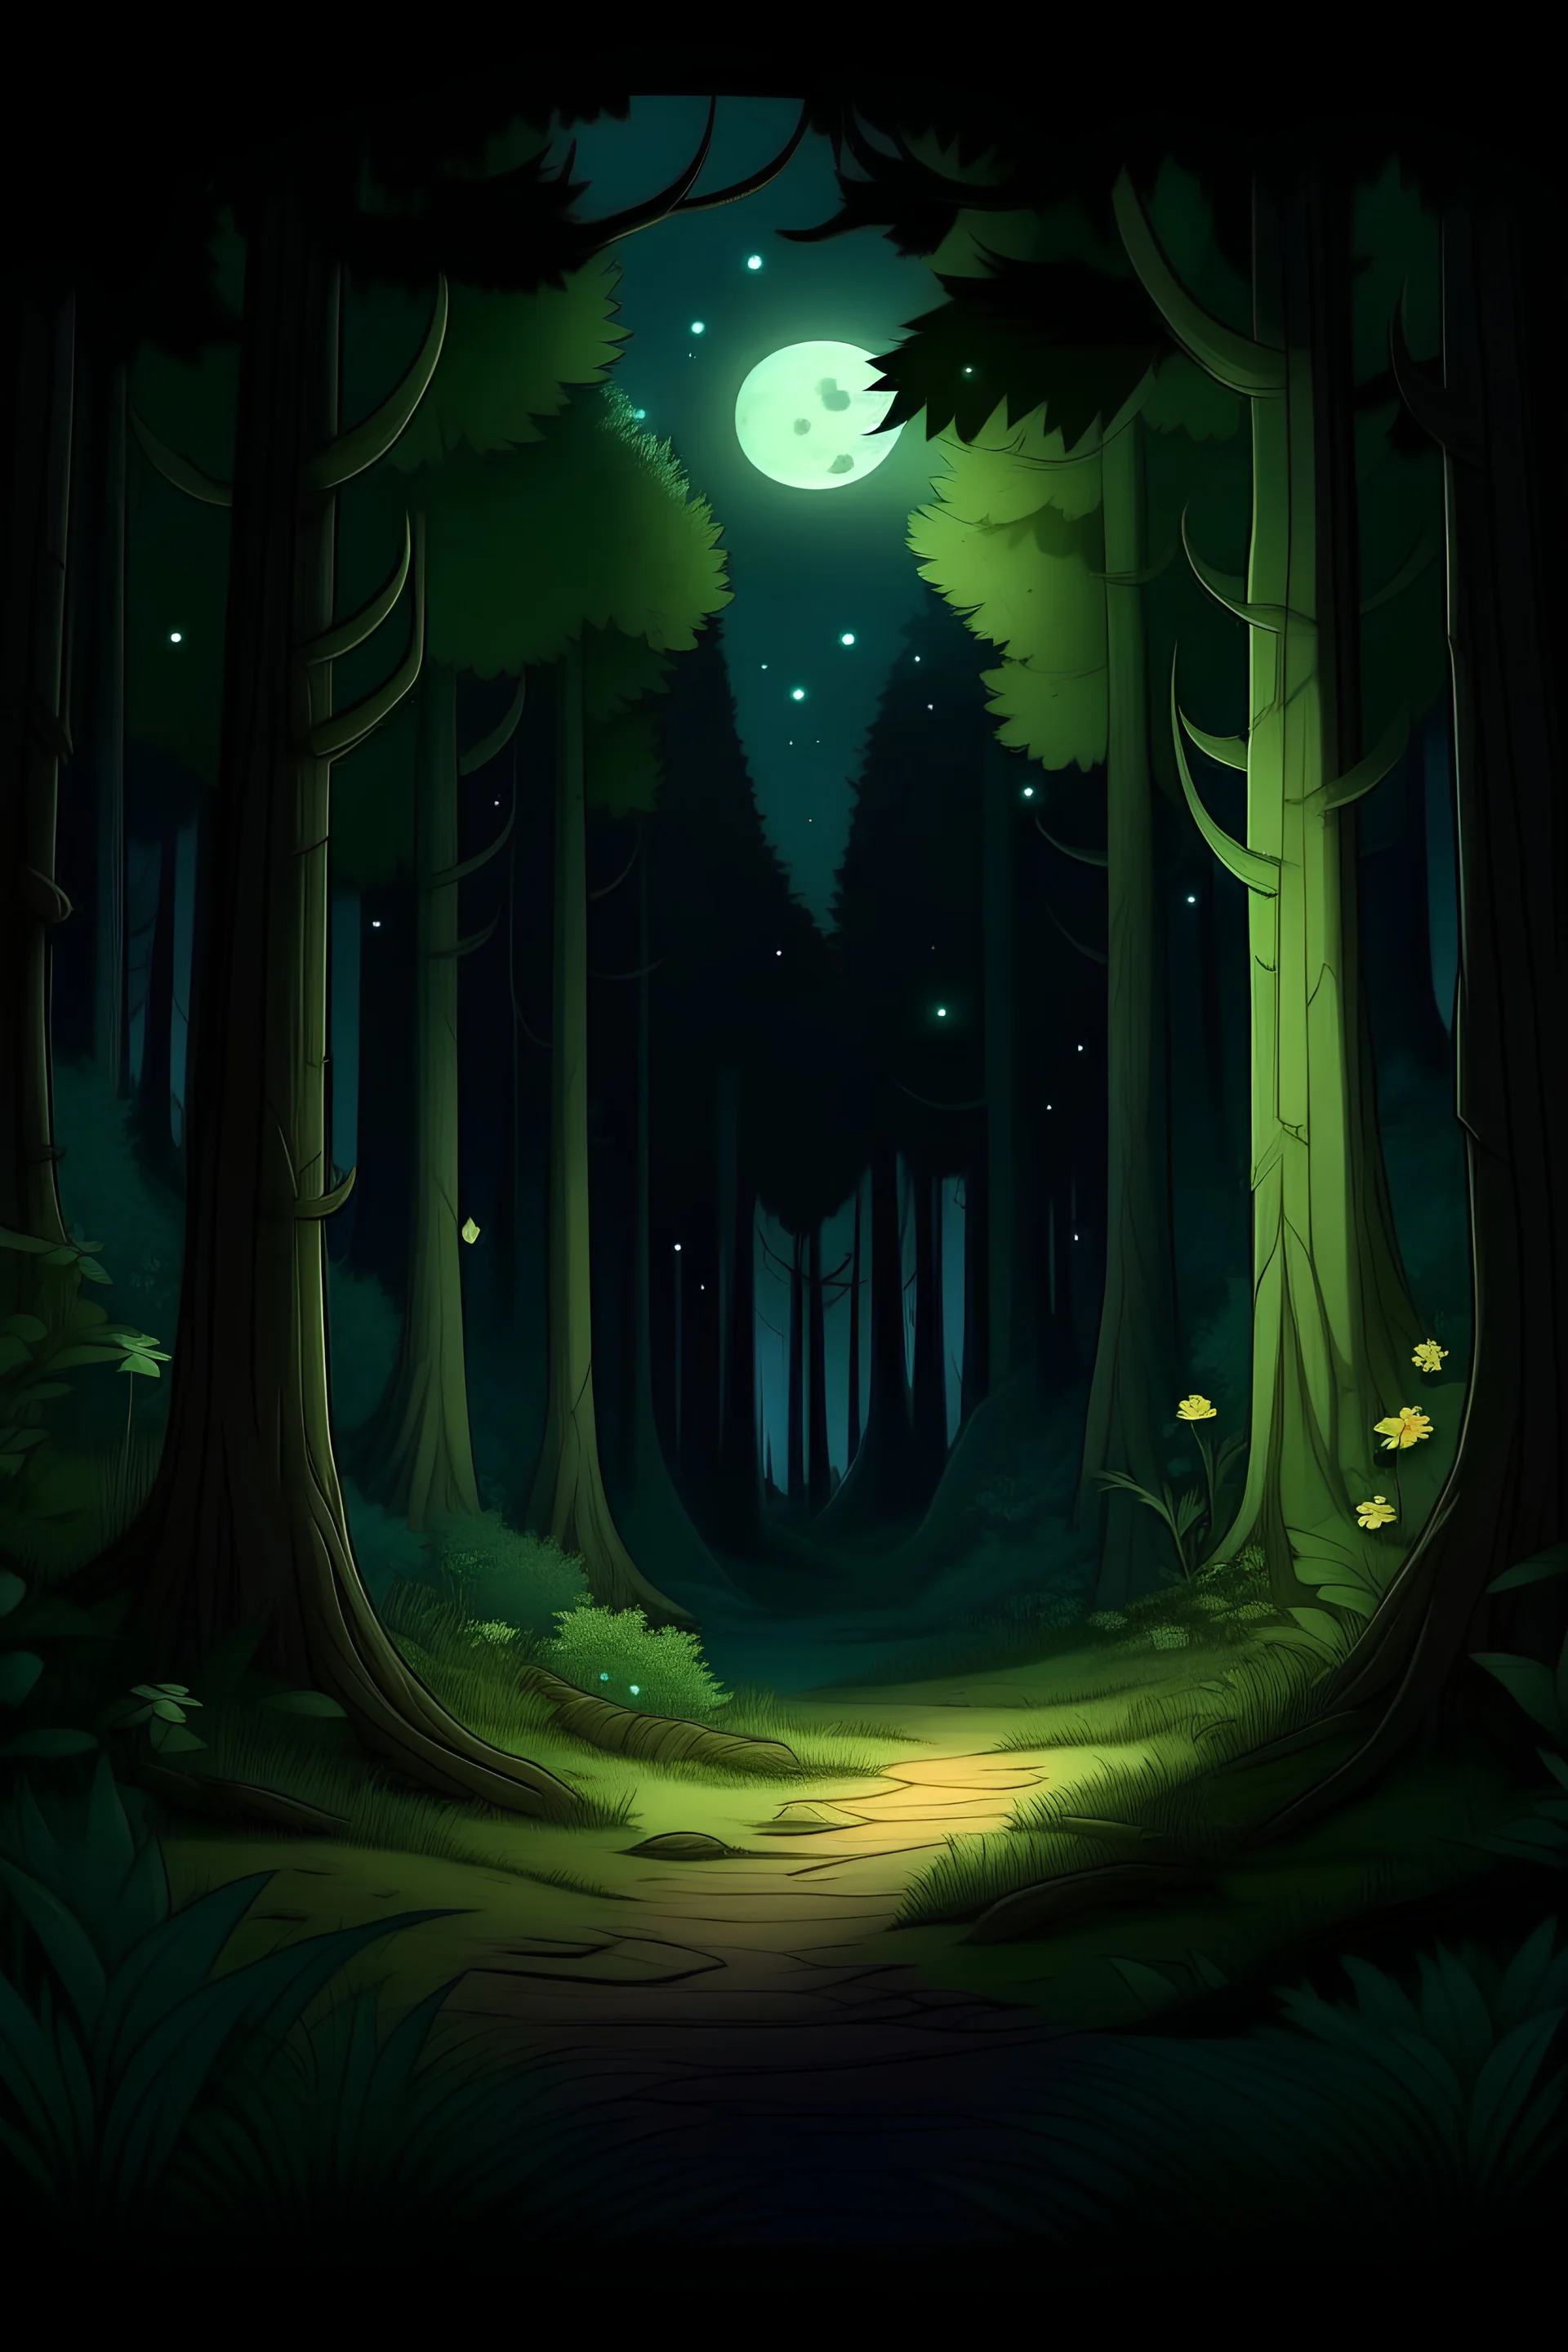 Tolong buatkan saya gambar kartun suasana malam di hutan